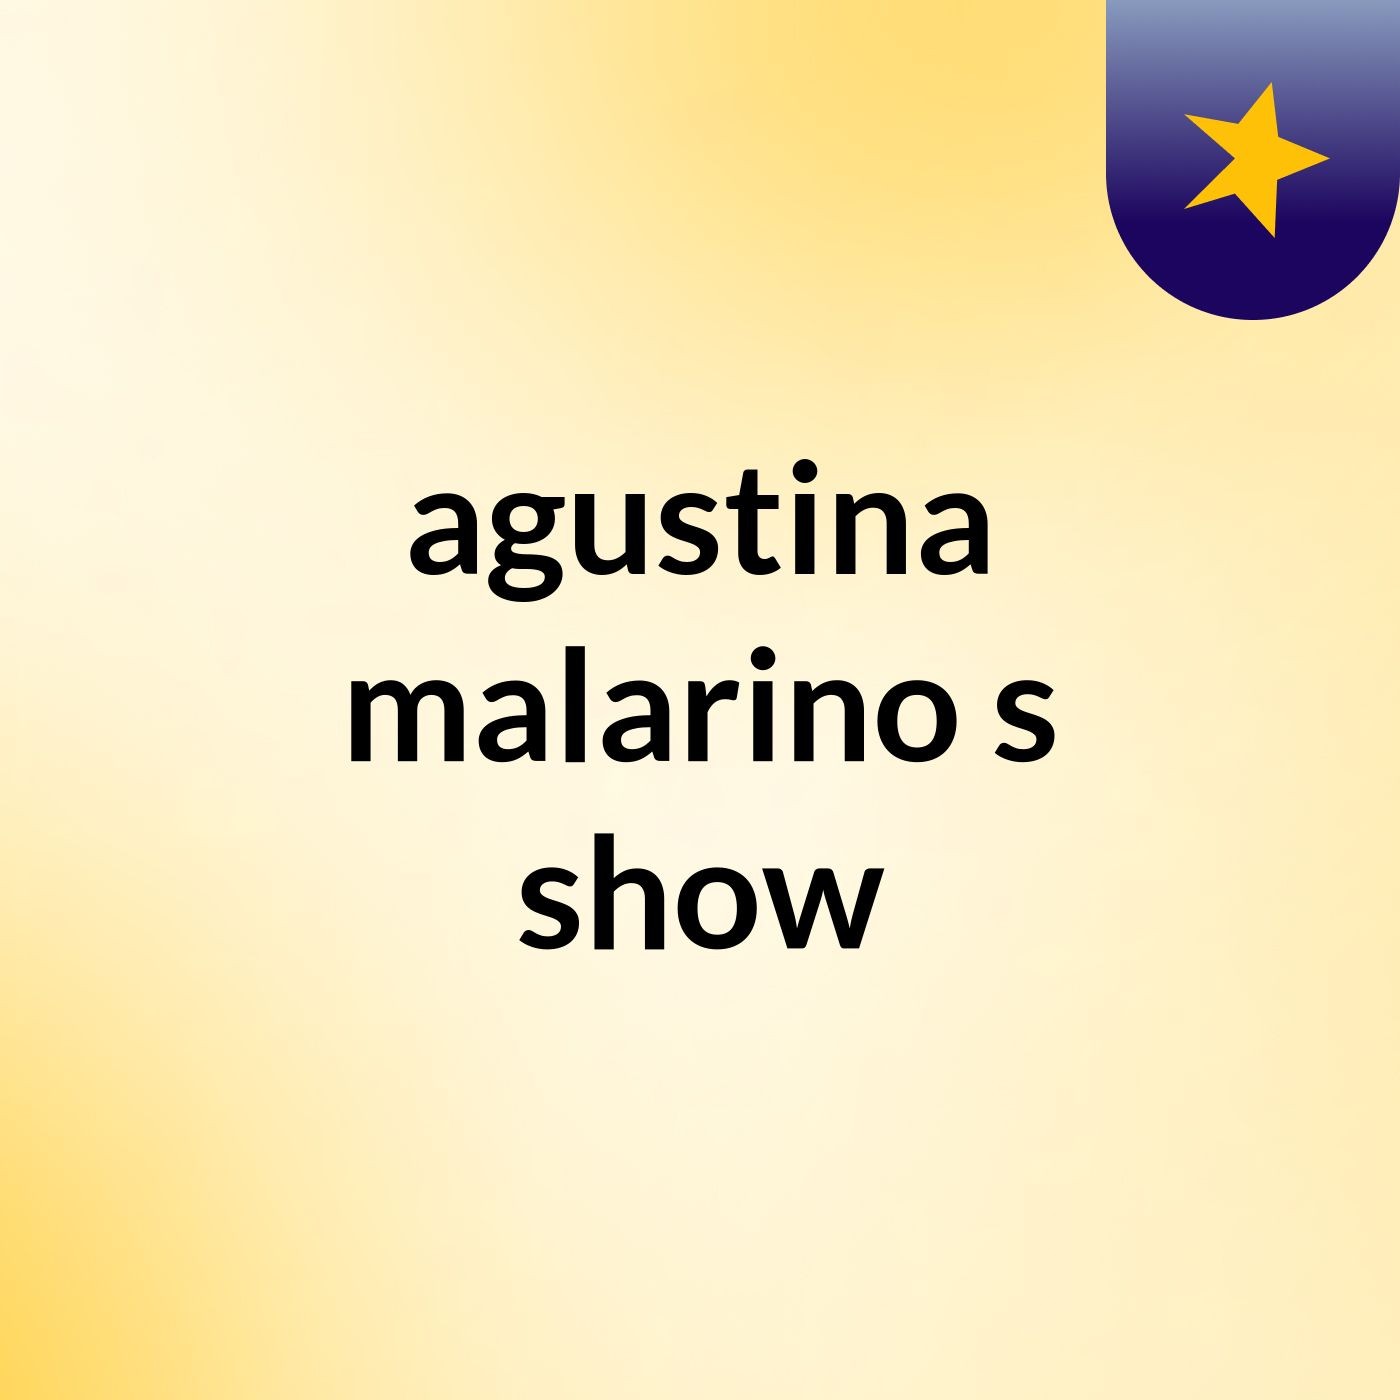 agustina malarino's show